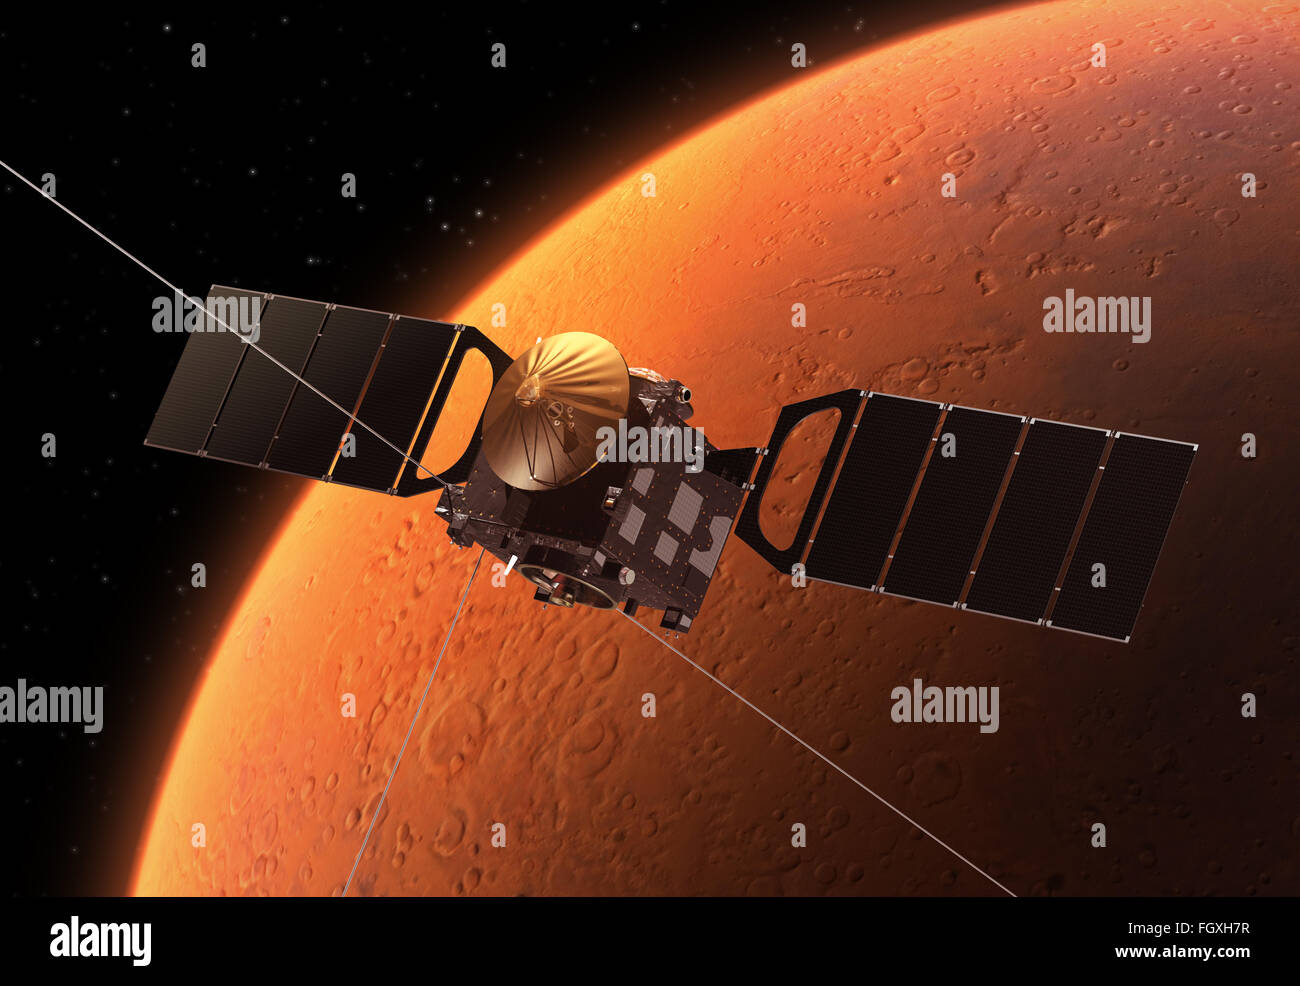 Interplanetary Space Station Orbiting Planet Mars. 3D Scene. Stock Photo